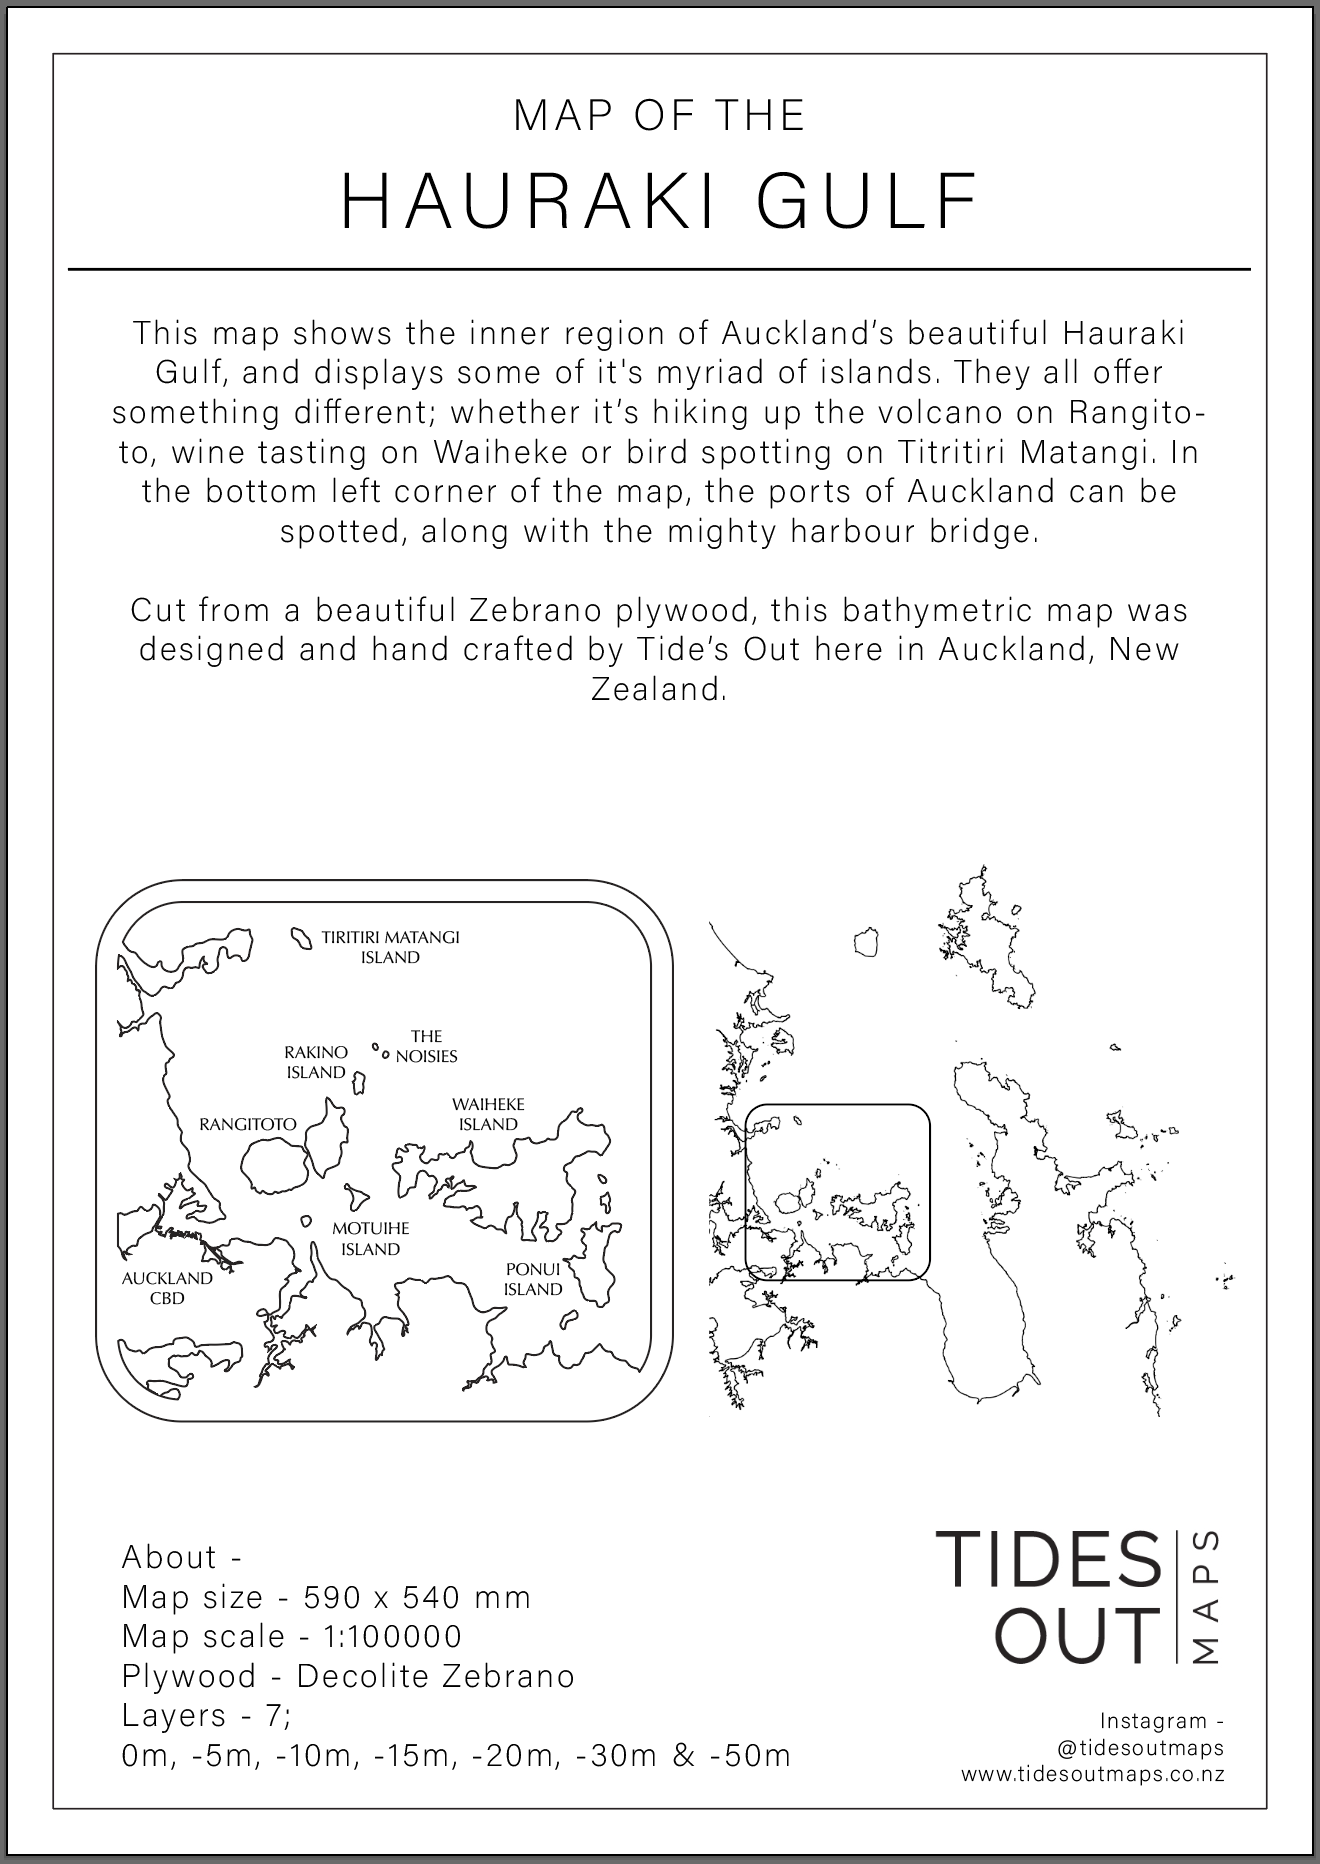 Hauraki Gulf - Tide's Out Maps